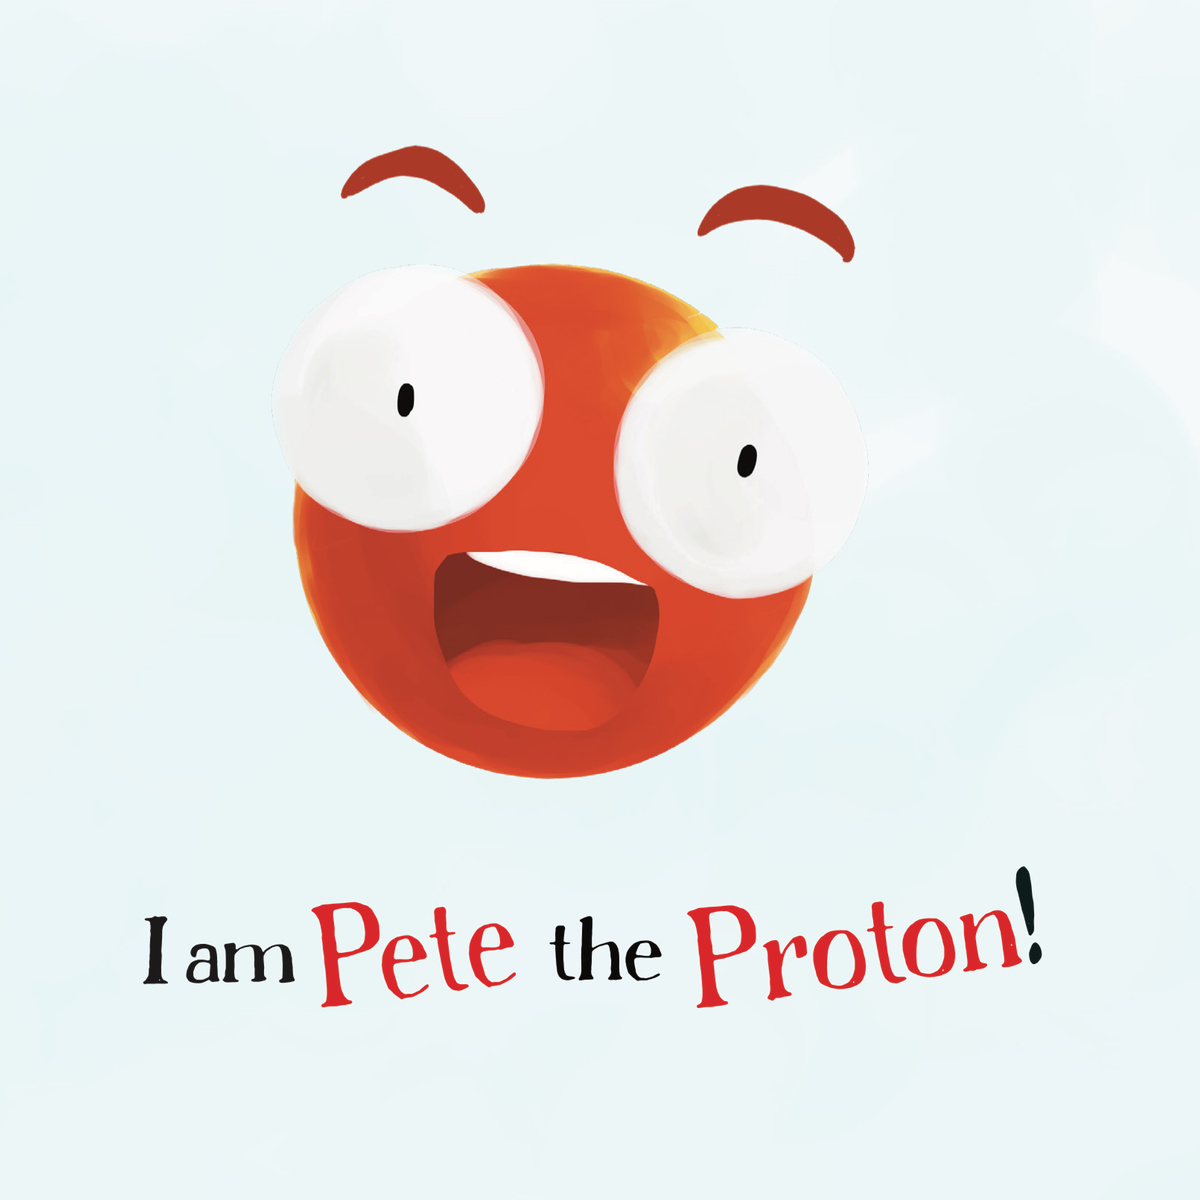 Pete the Proton JPEG